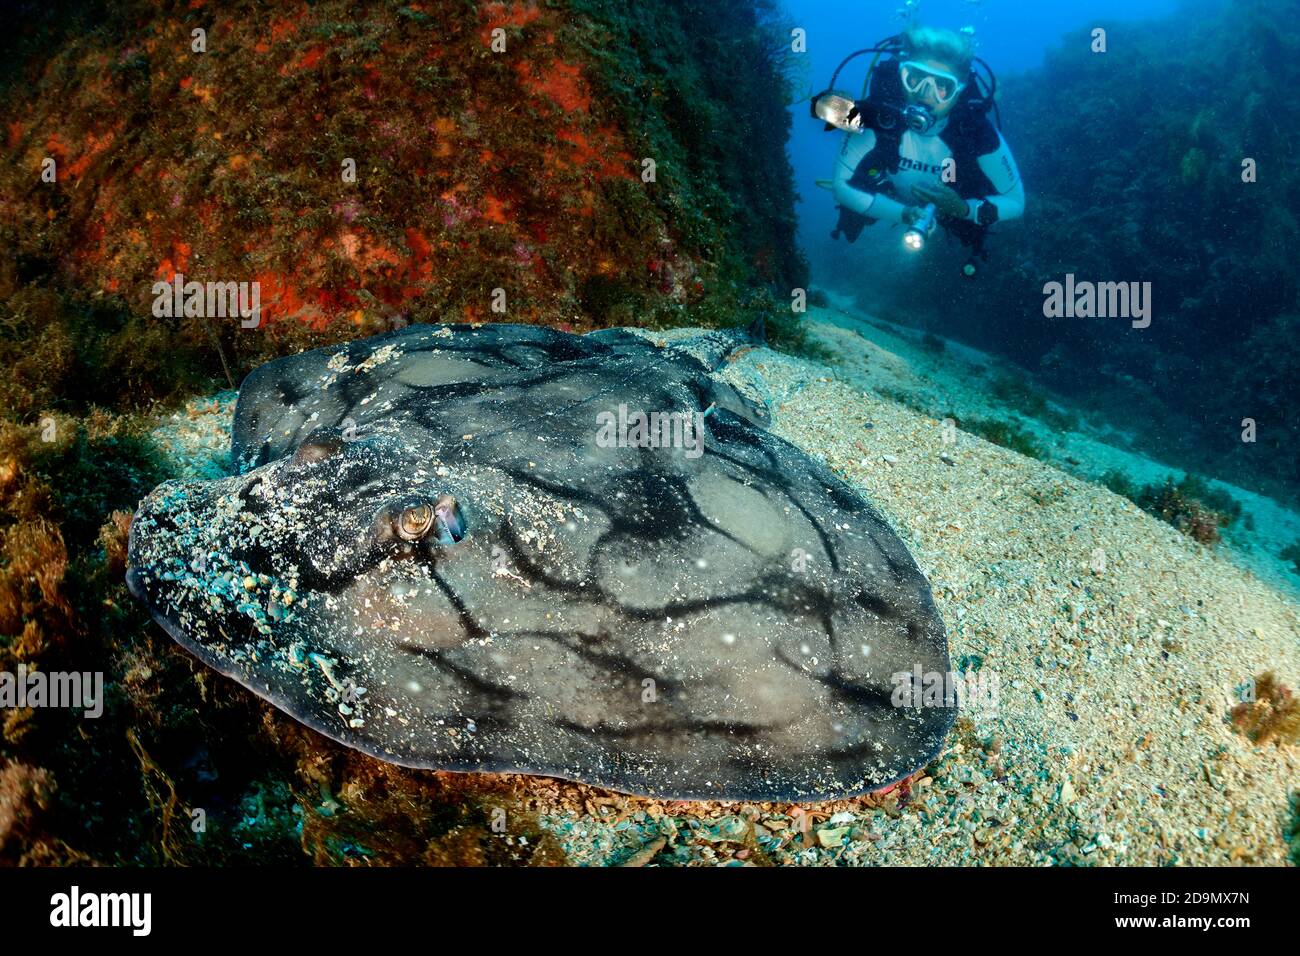 Marble rays, Raja undulata, and divers, Tamariu, Costa Brava, Spain, Mediterranean Stock Photo